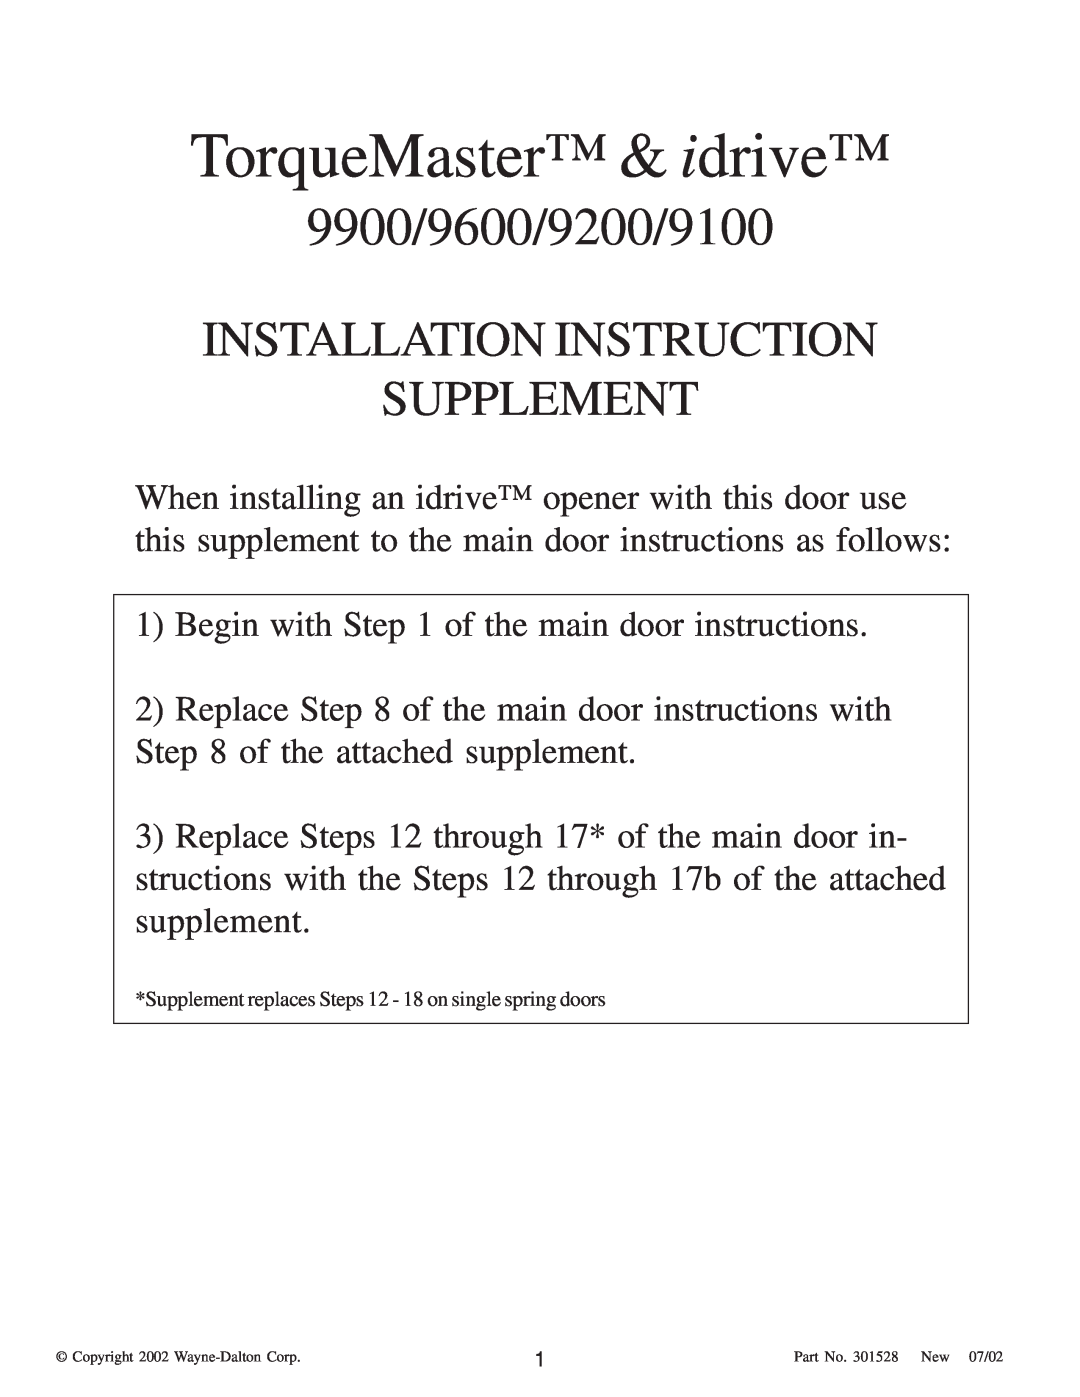 Wayne-Dalton 9600 installation instructions 9100, 9400, AND, TorqueMaster - Single and Double Spring 